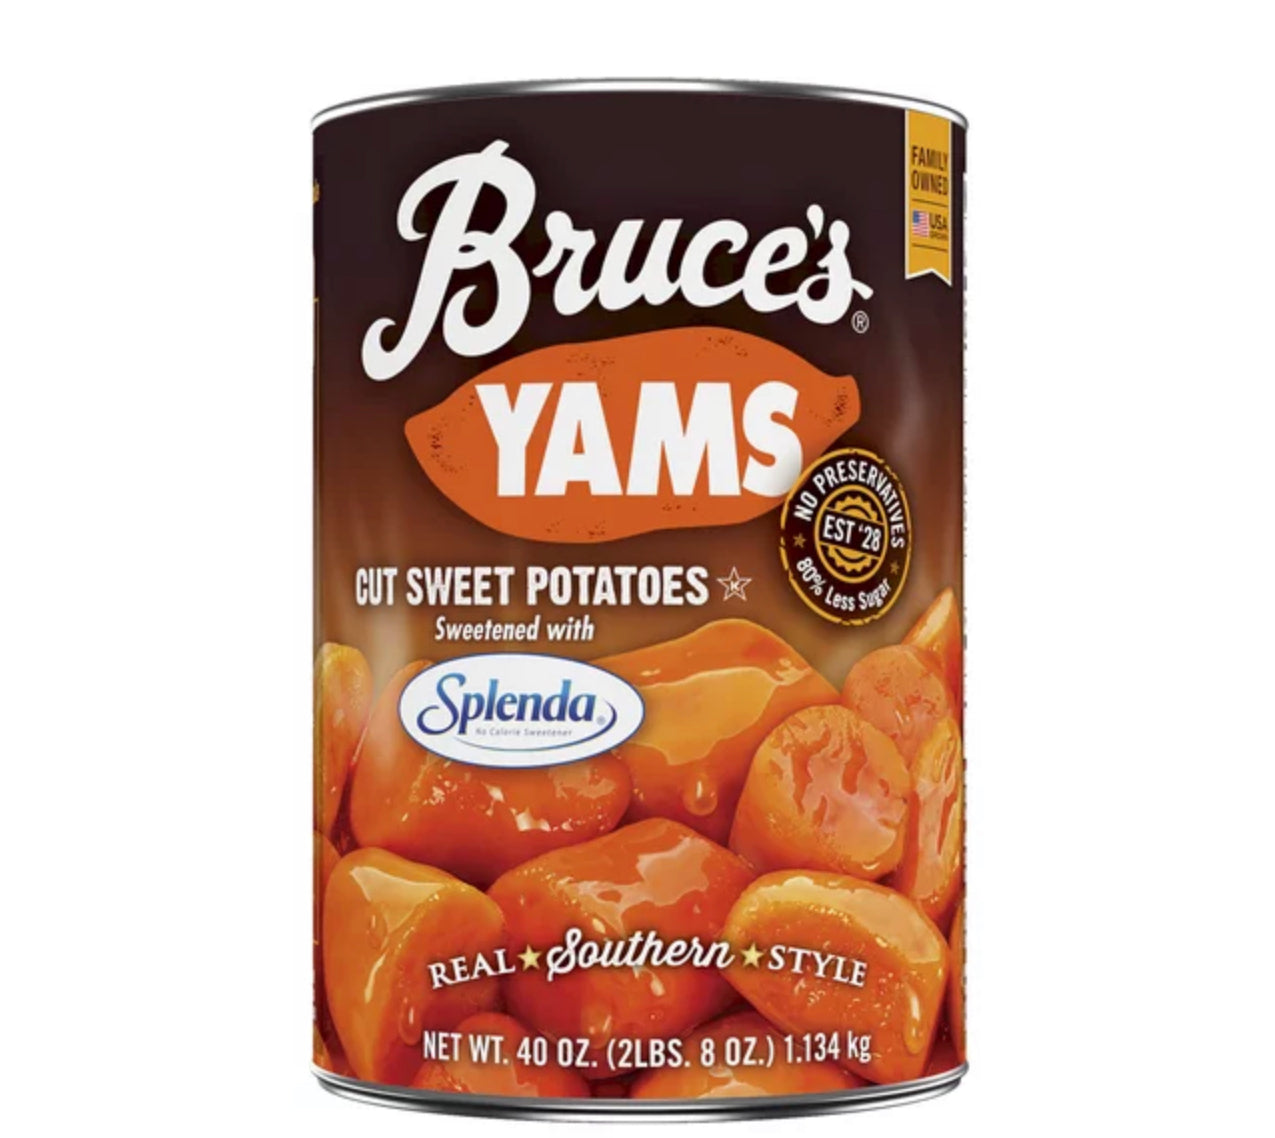 Bruce's Yams Cut Sweet Potatoes Sweetened With Splenda 40oz